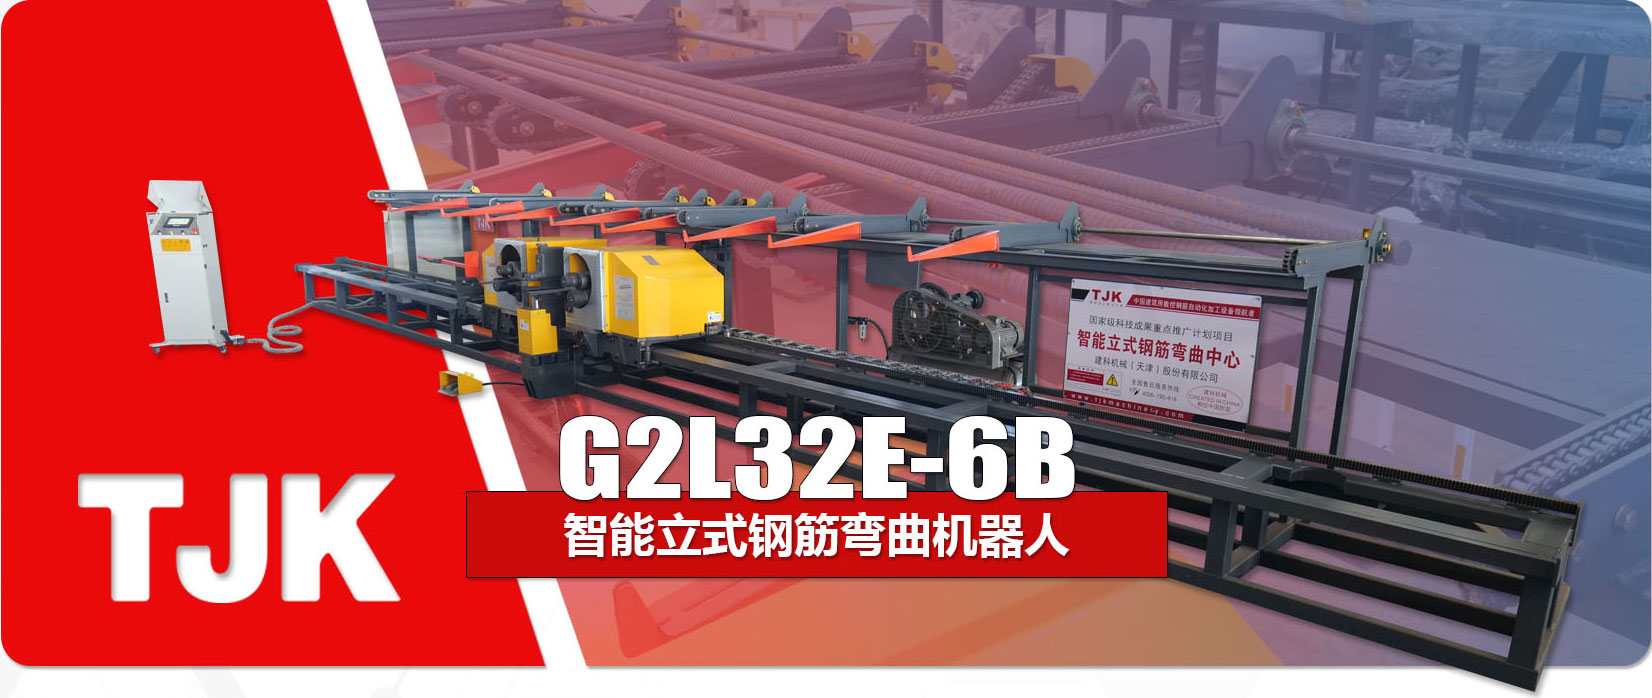 G2L32E-6B产品特点_03.jpg